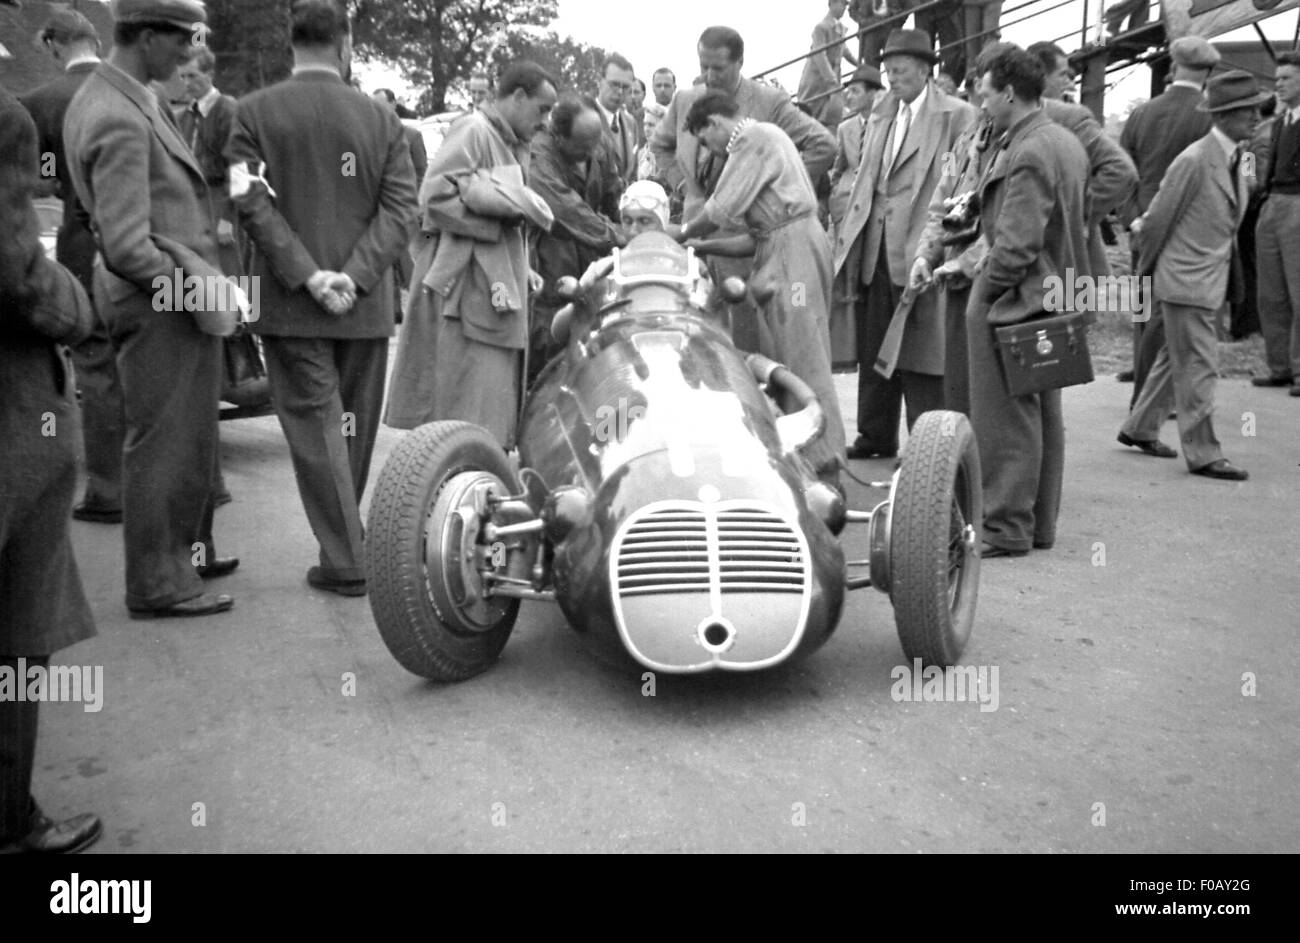 MASERATI 4CLT British GP Silverstone 1949 Stock Photo